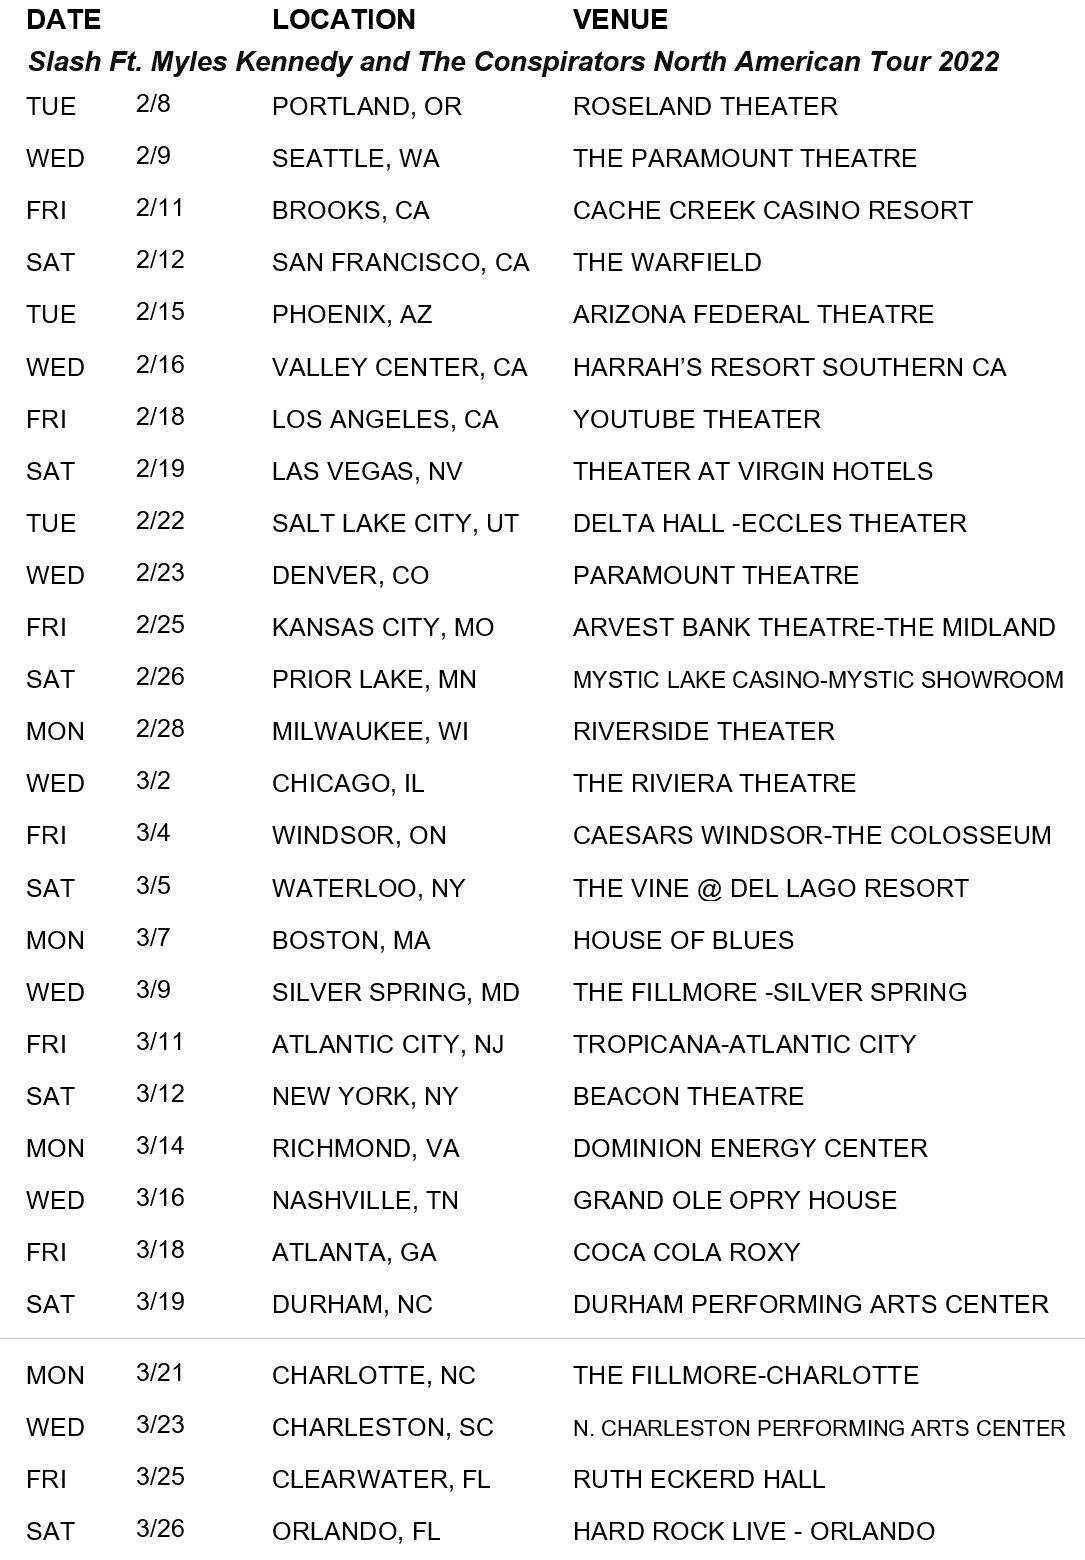 The SLASH FT. MYLES KENNEDY & THE CONSPIRATORS tour dates: